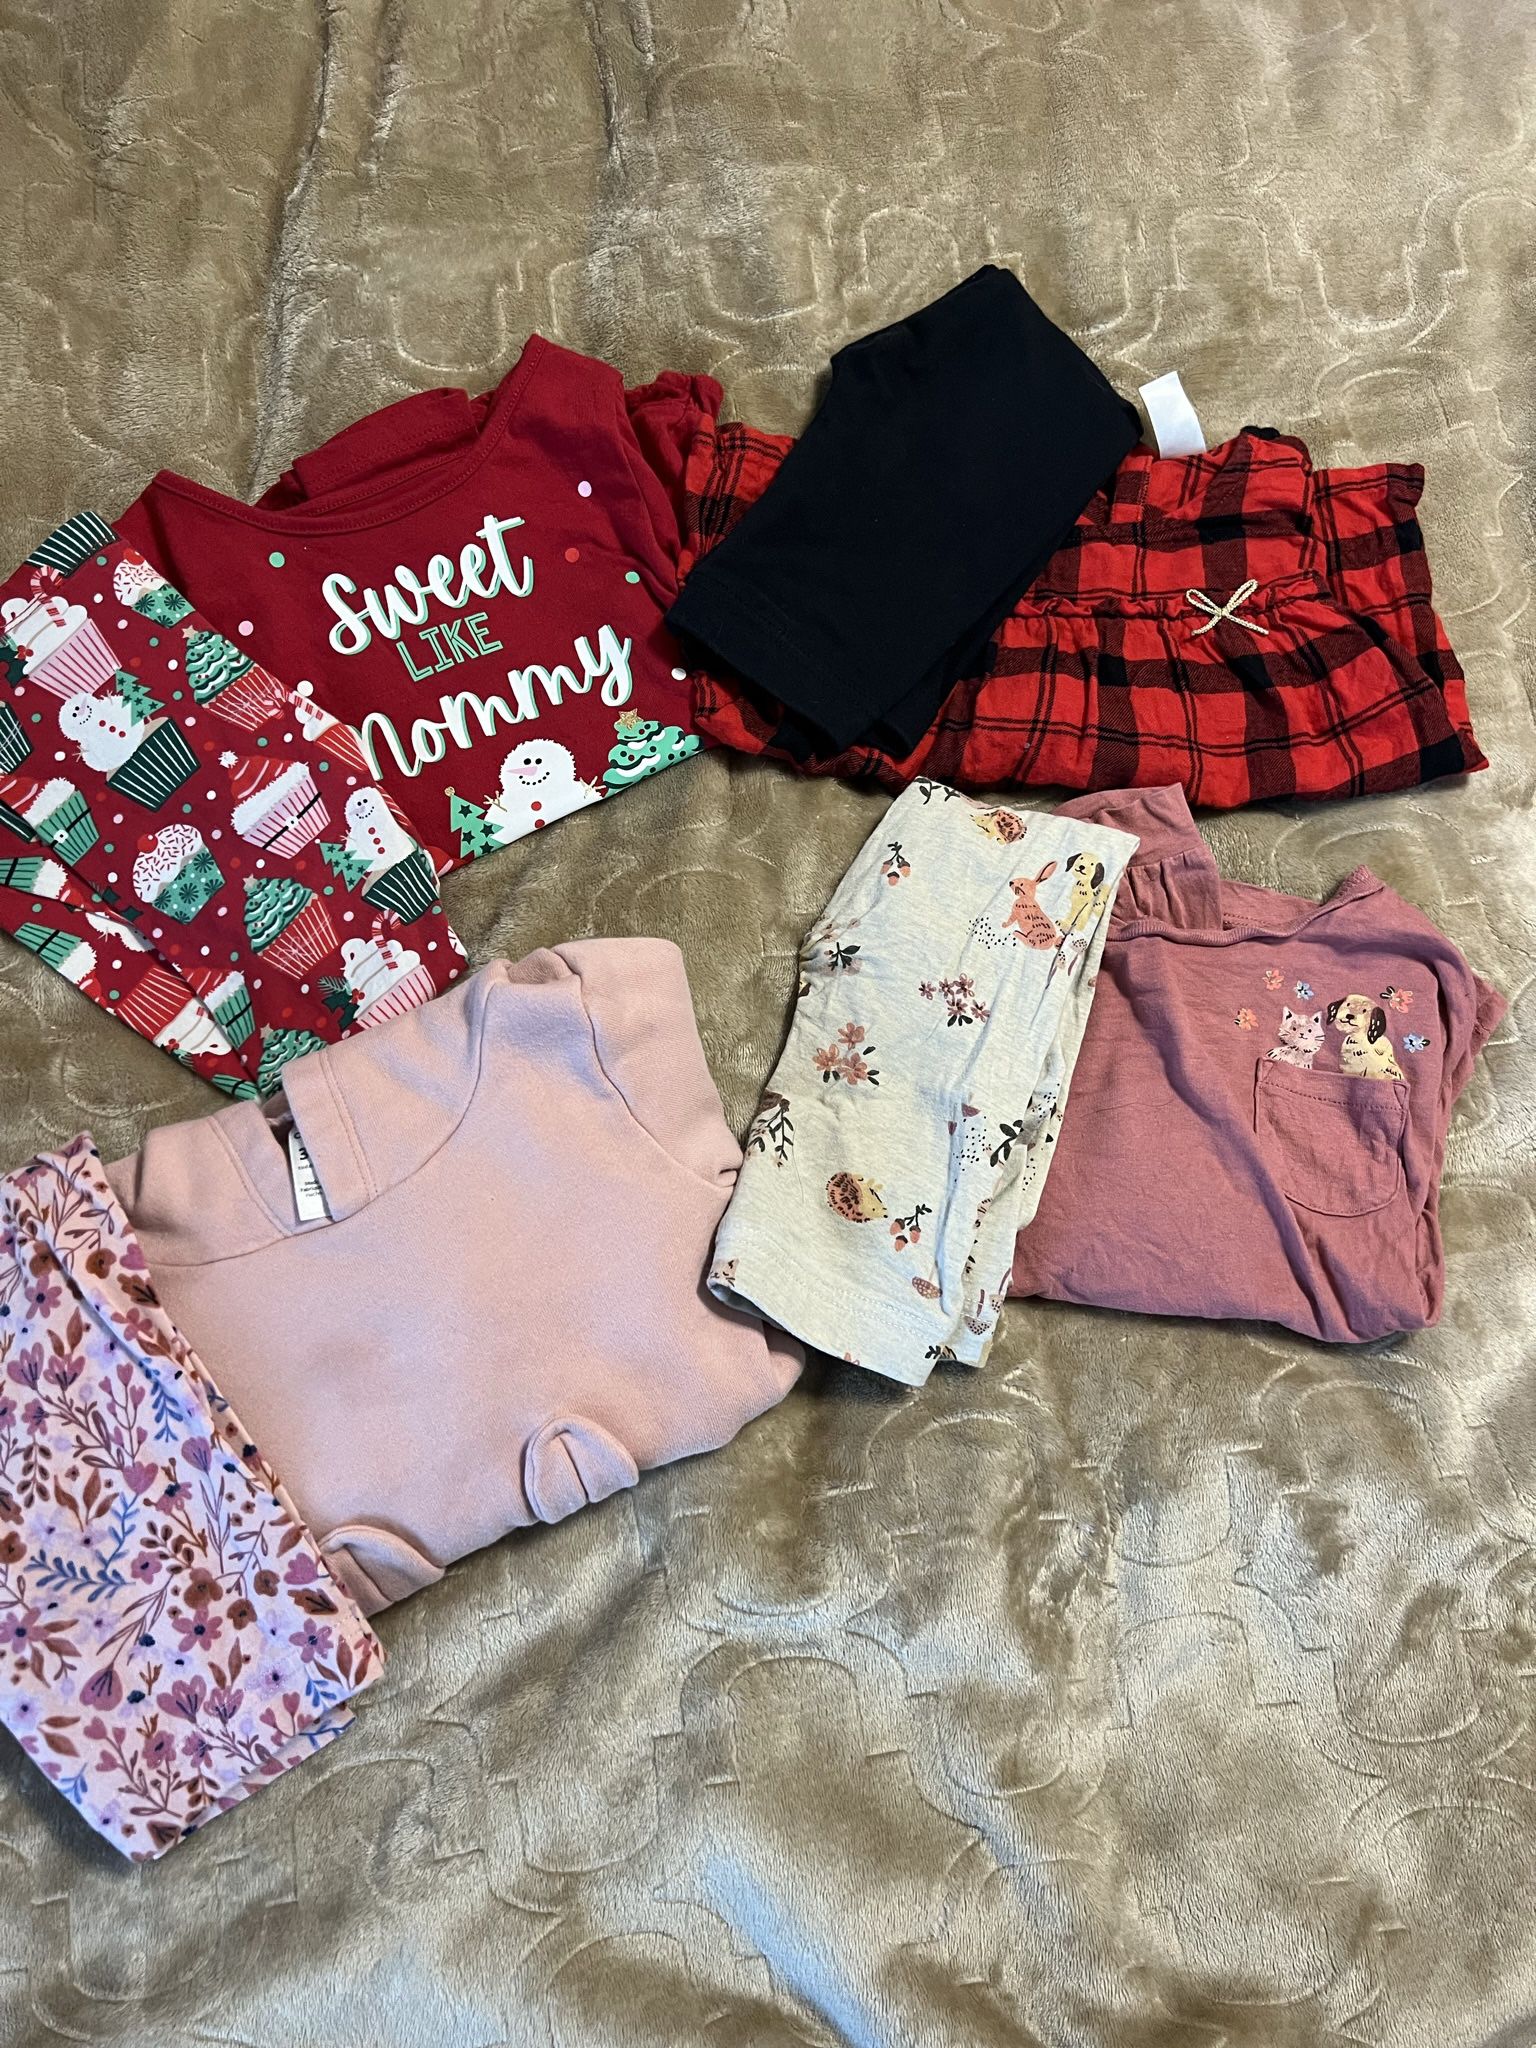 3T Toddler Girl Clothing Lot 